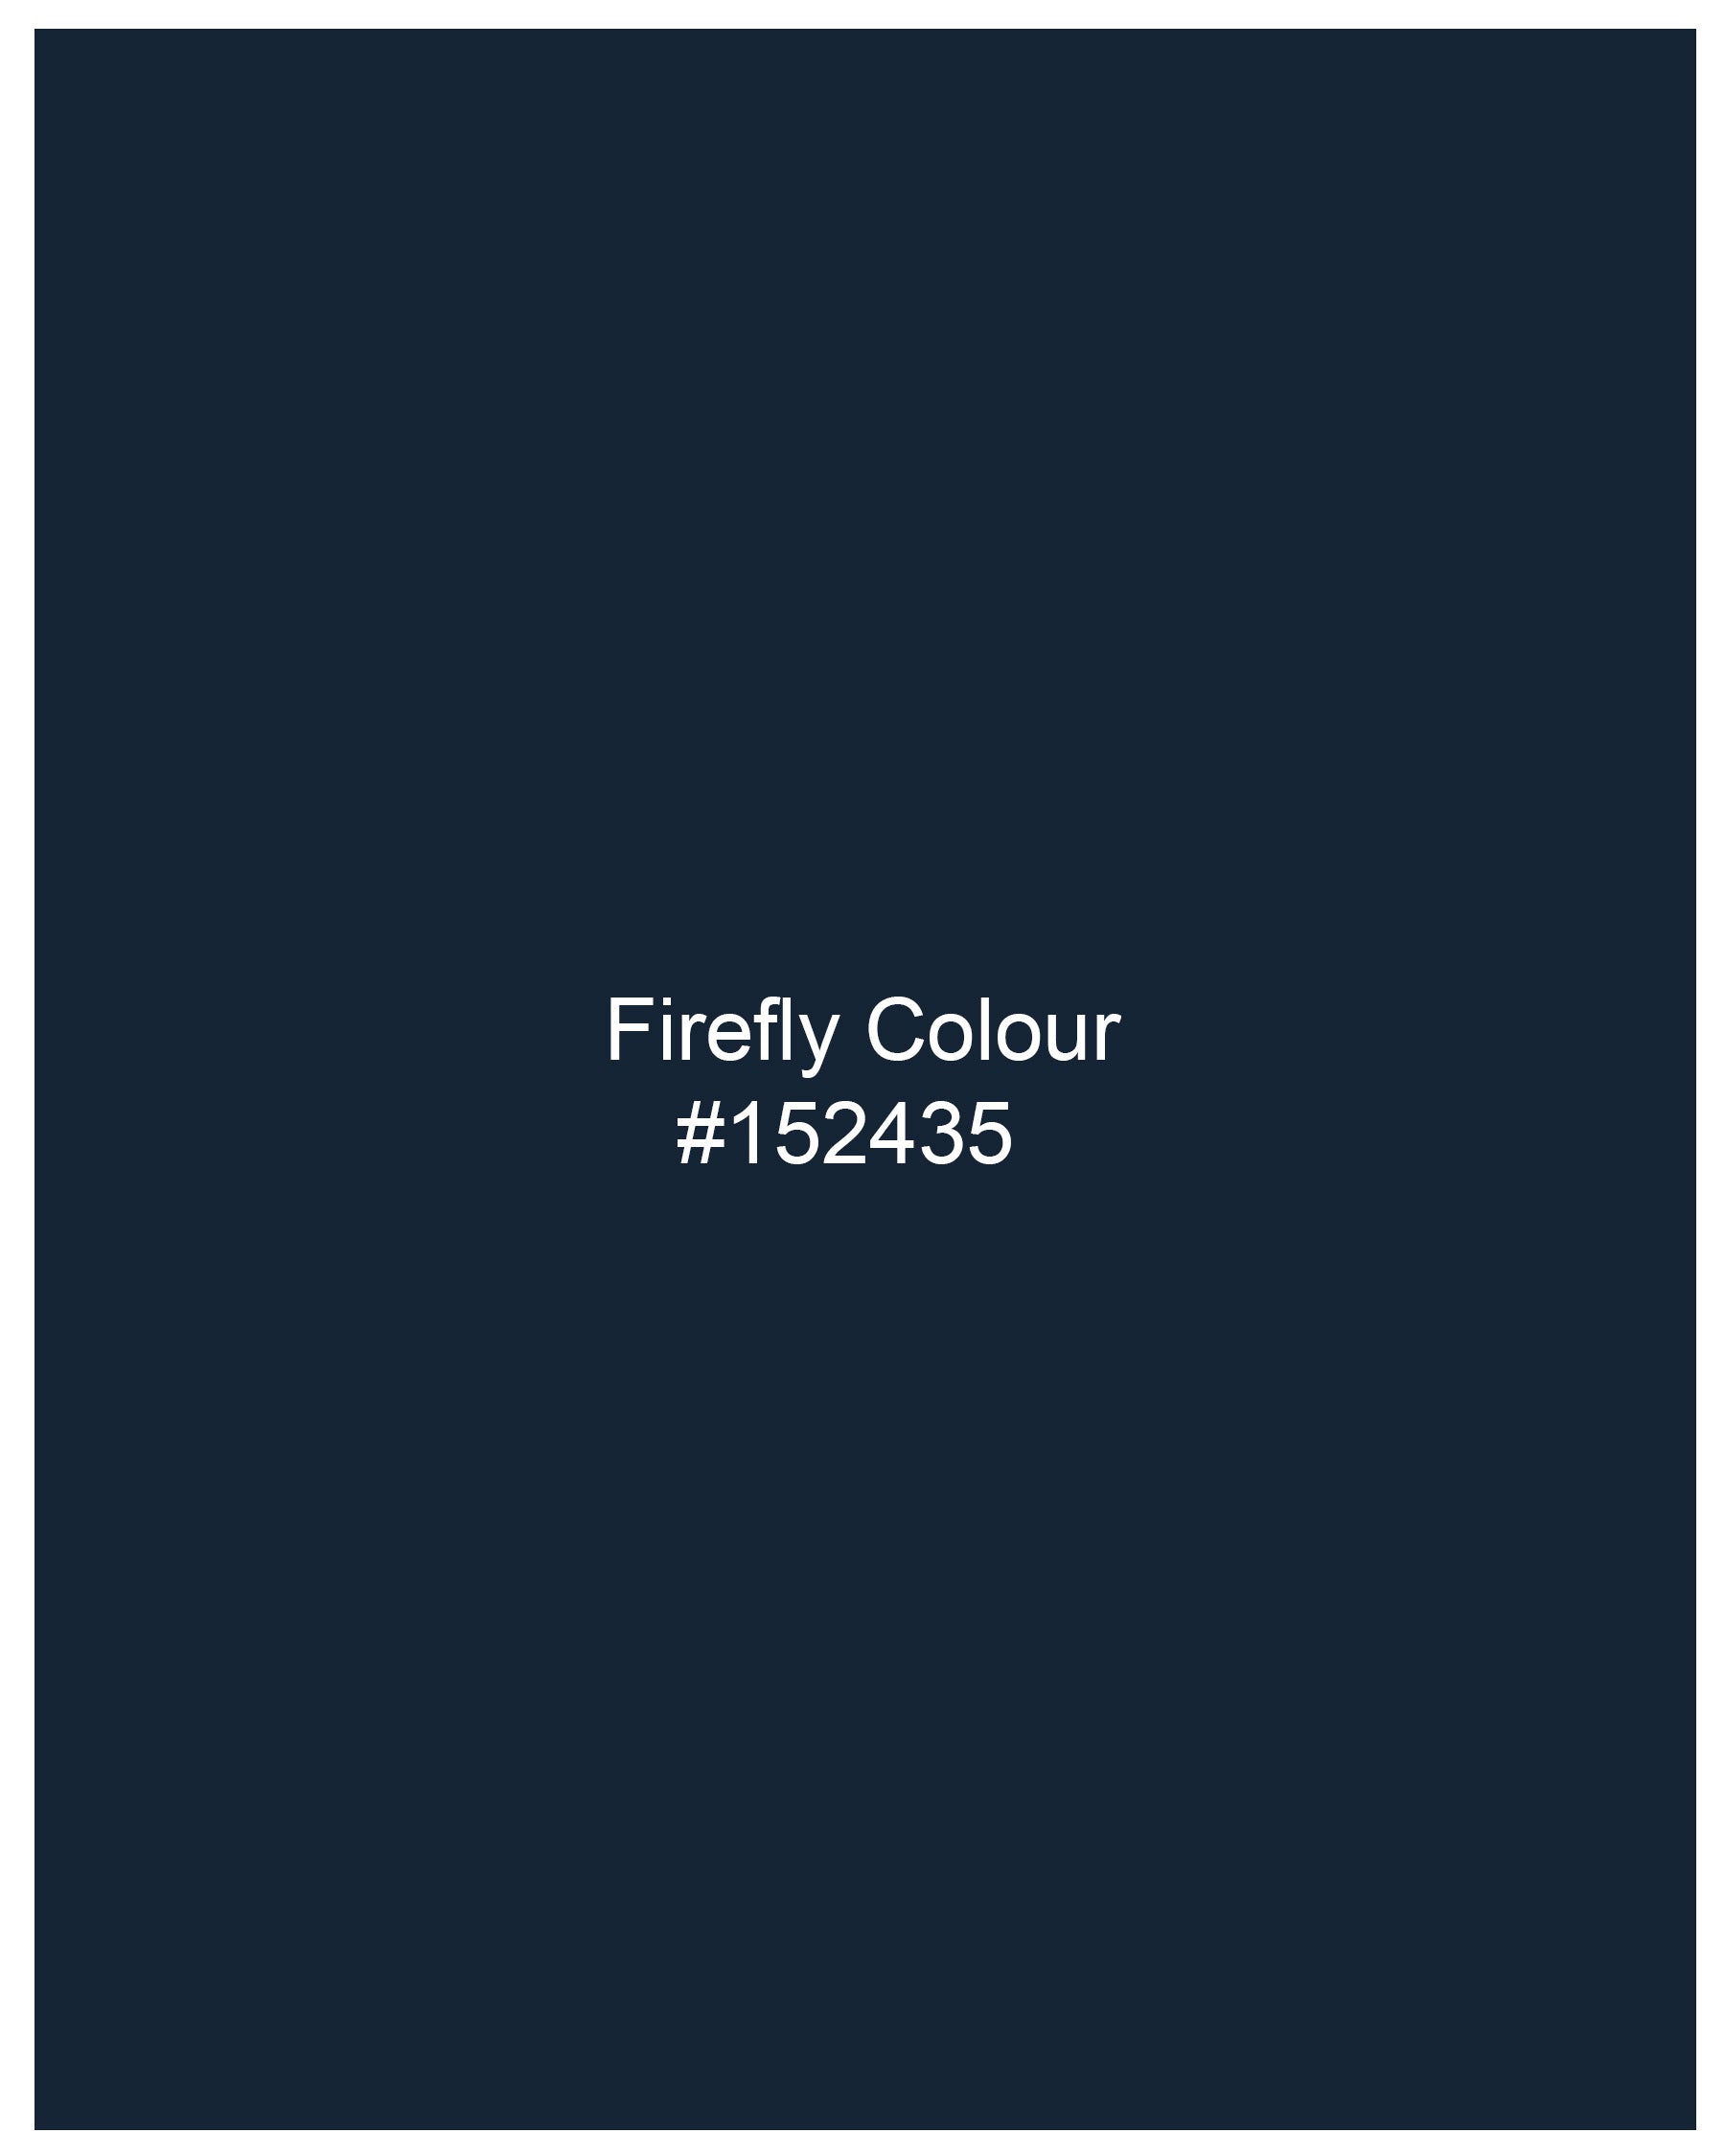 Firefly Navy Blue Premium Cotton Shirt 8055-BLE-38, 8055-BLE-H-38, 8055-BLE-39, 8055-BLE-H-39, 8055-BLE-40, 8055-BLE-H-40, 8055-BLE-42, 8055-BLE-H-42, 8055-BLE-44, 8055-BLE-H-44, 8055-BLE-46, 8055-BLE-H-46, 8055-BLE-48, 8055-BLE-H-48, 8055-BLE-50, 8055-BLE-H-50, 8055-BLE-52, 8055-BLE-H-52